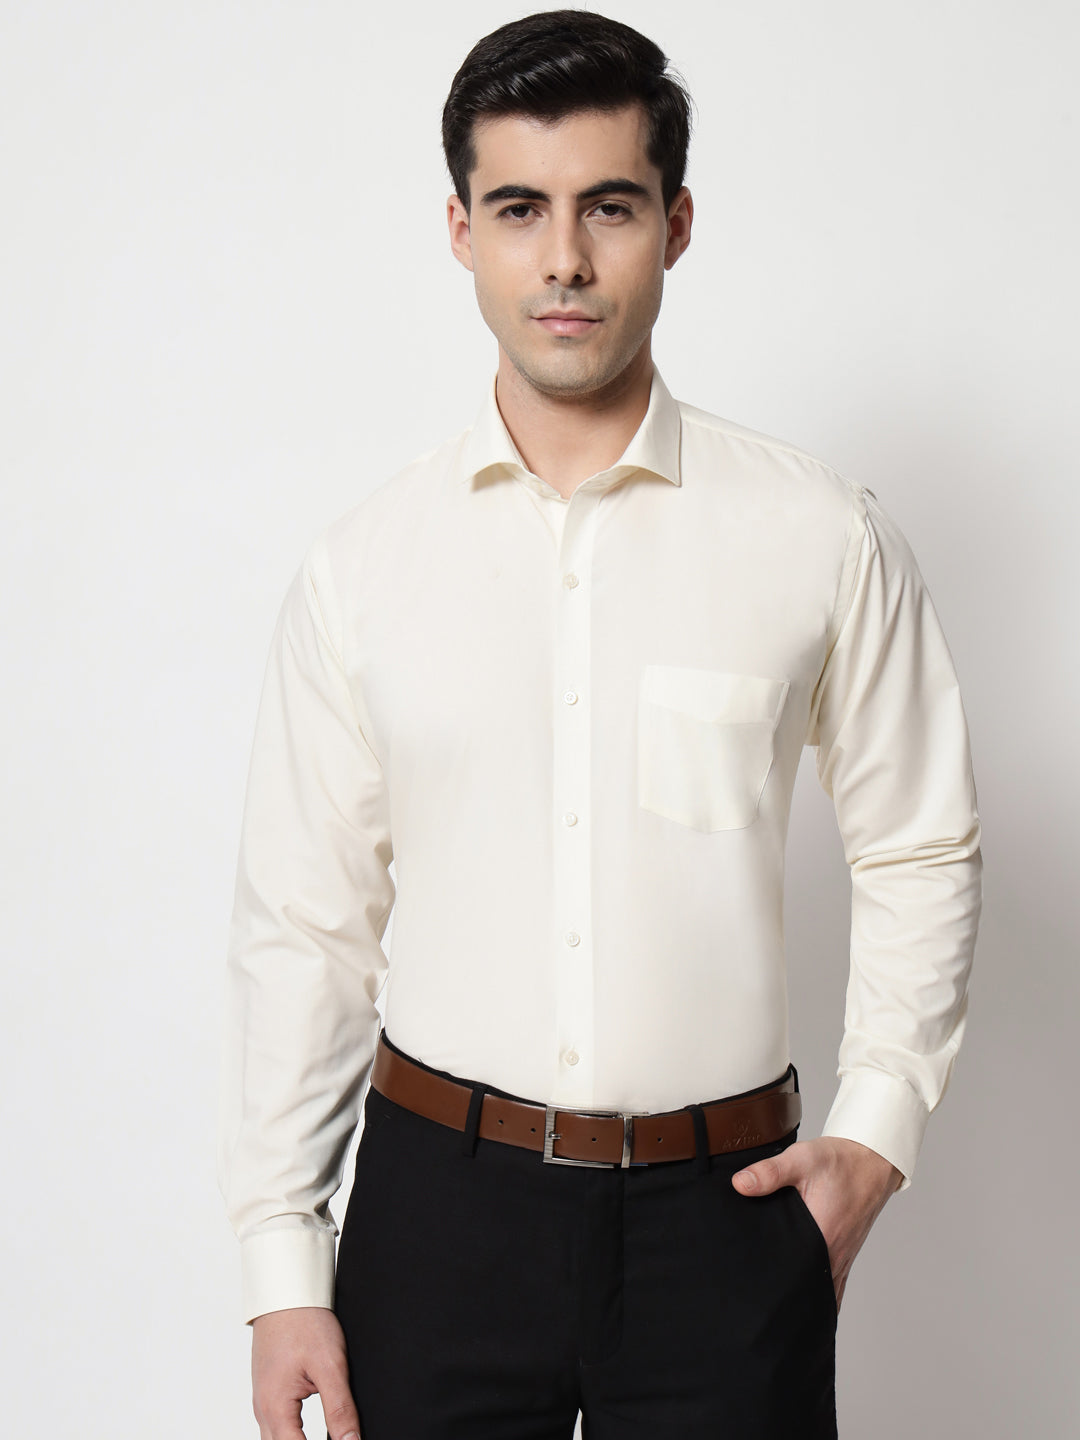 Black and White Shirts Cream Plain Solid Shirt